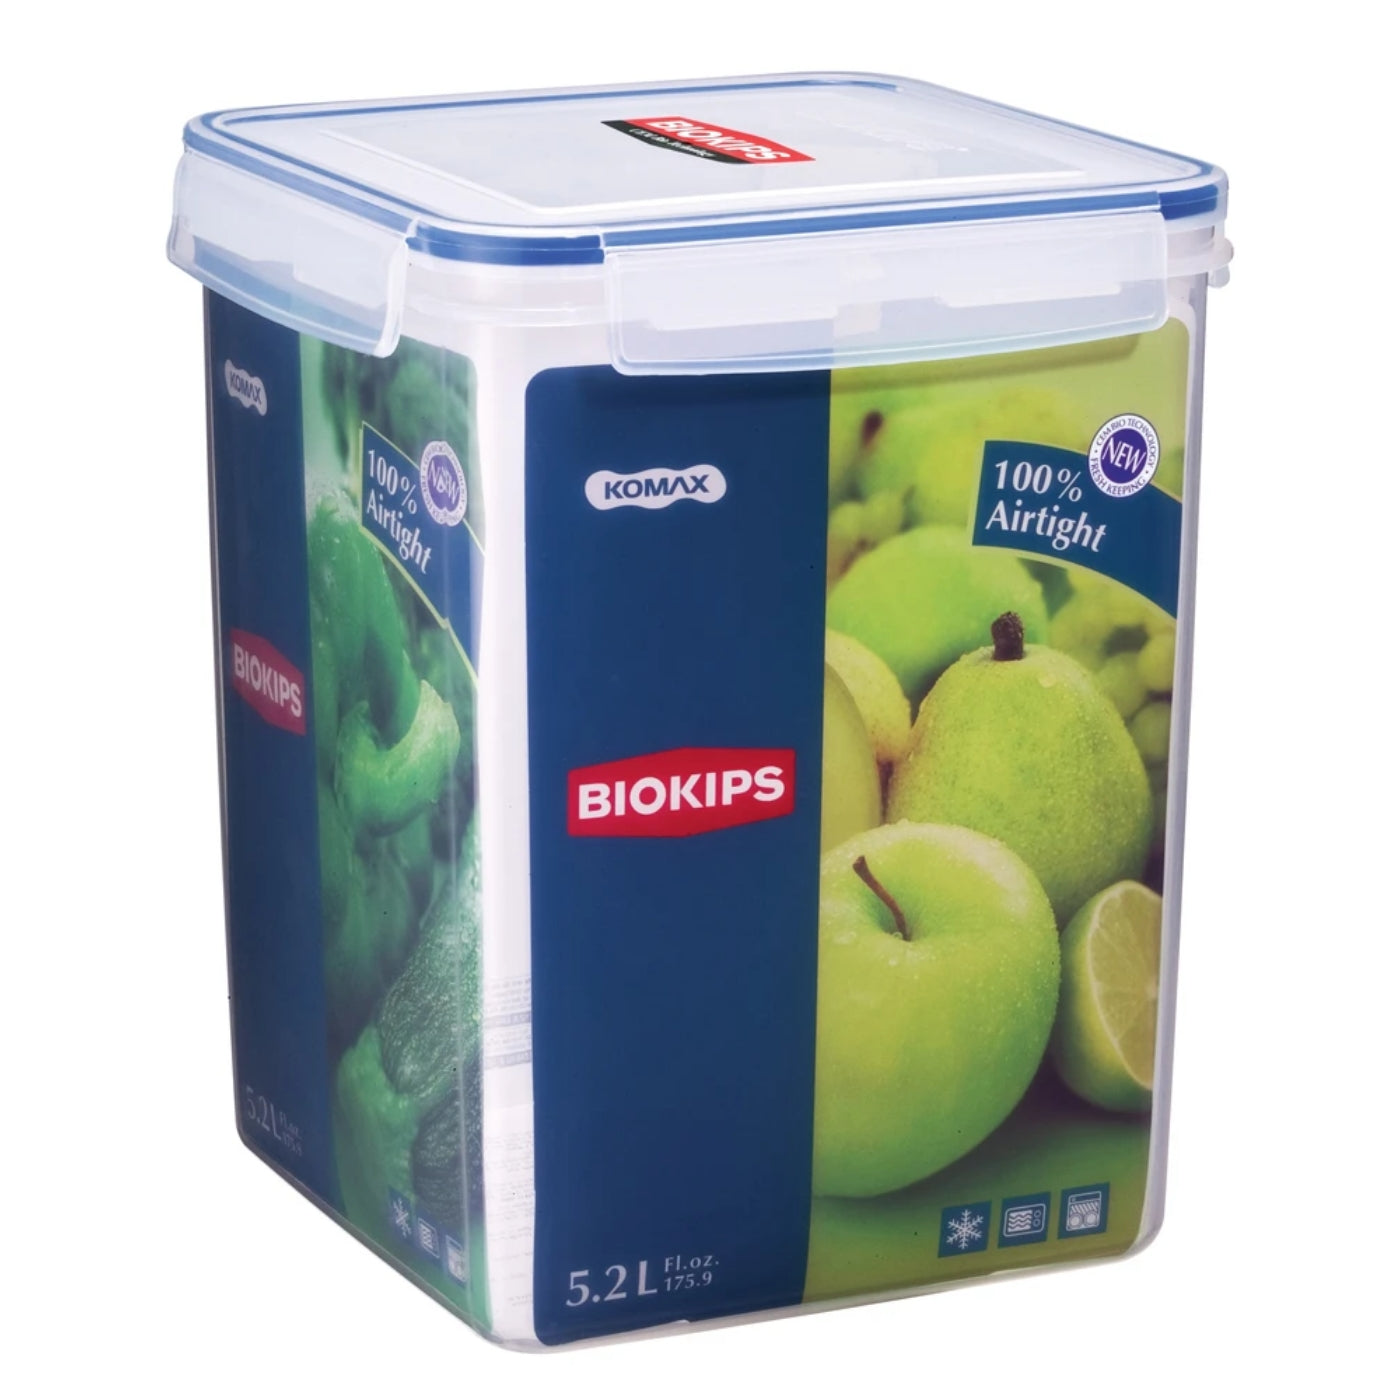 komax Komax Biokips Flour and Sugar Storage Containers